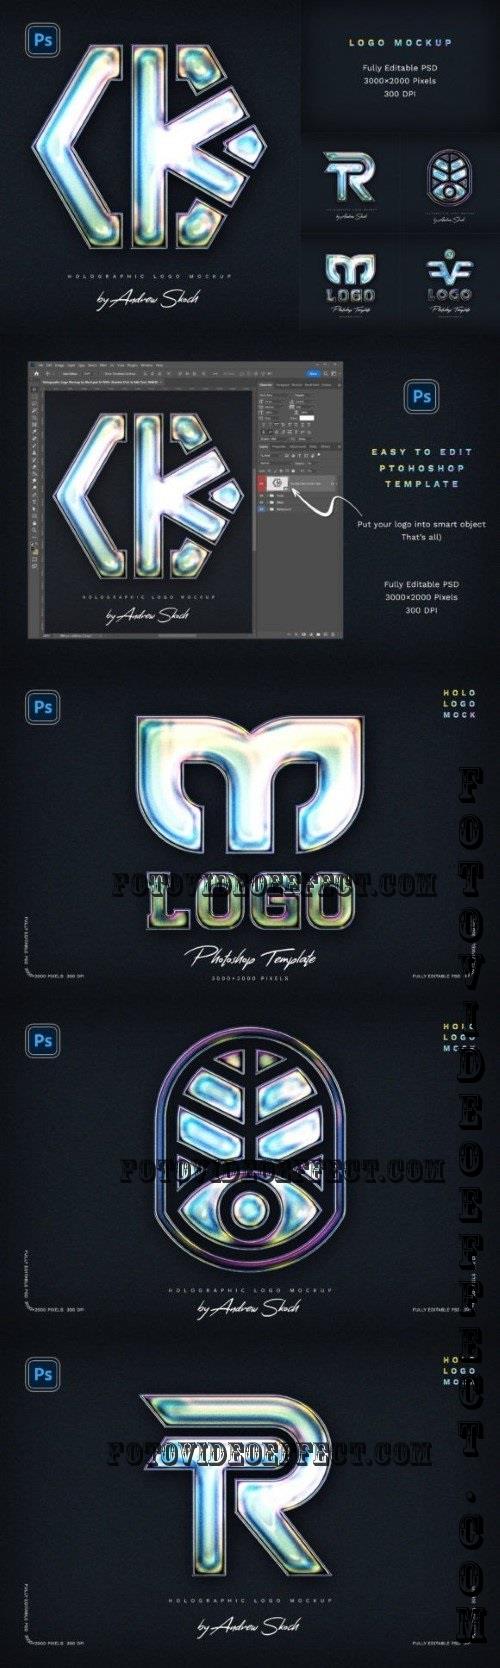 Holographic Logo Mockup - 91549298